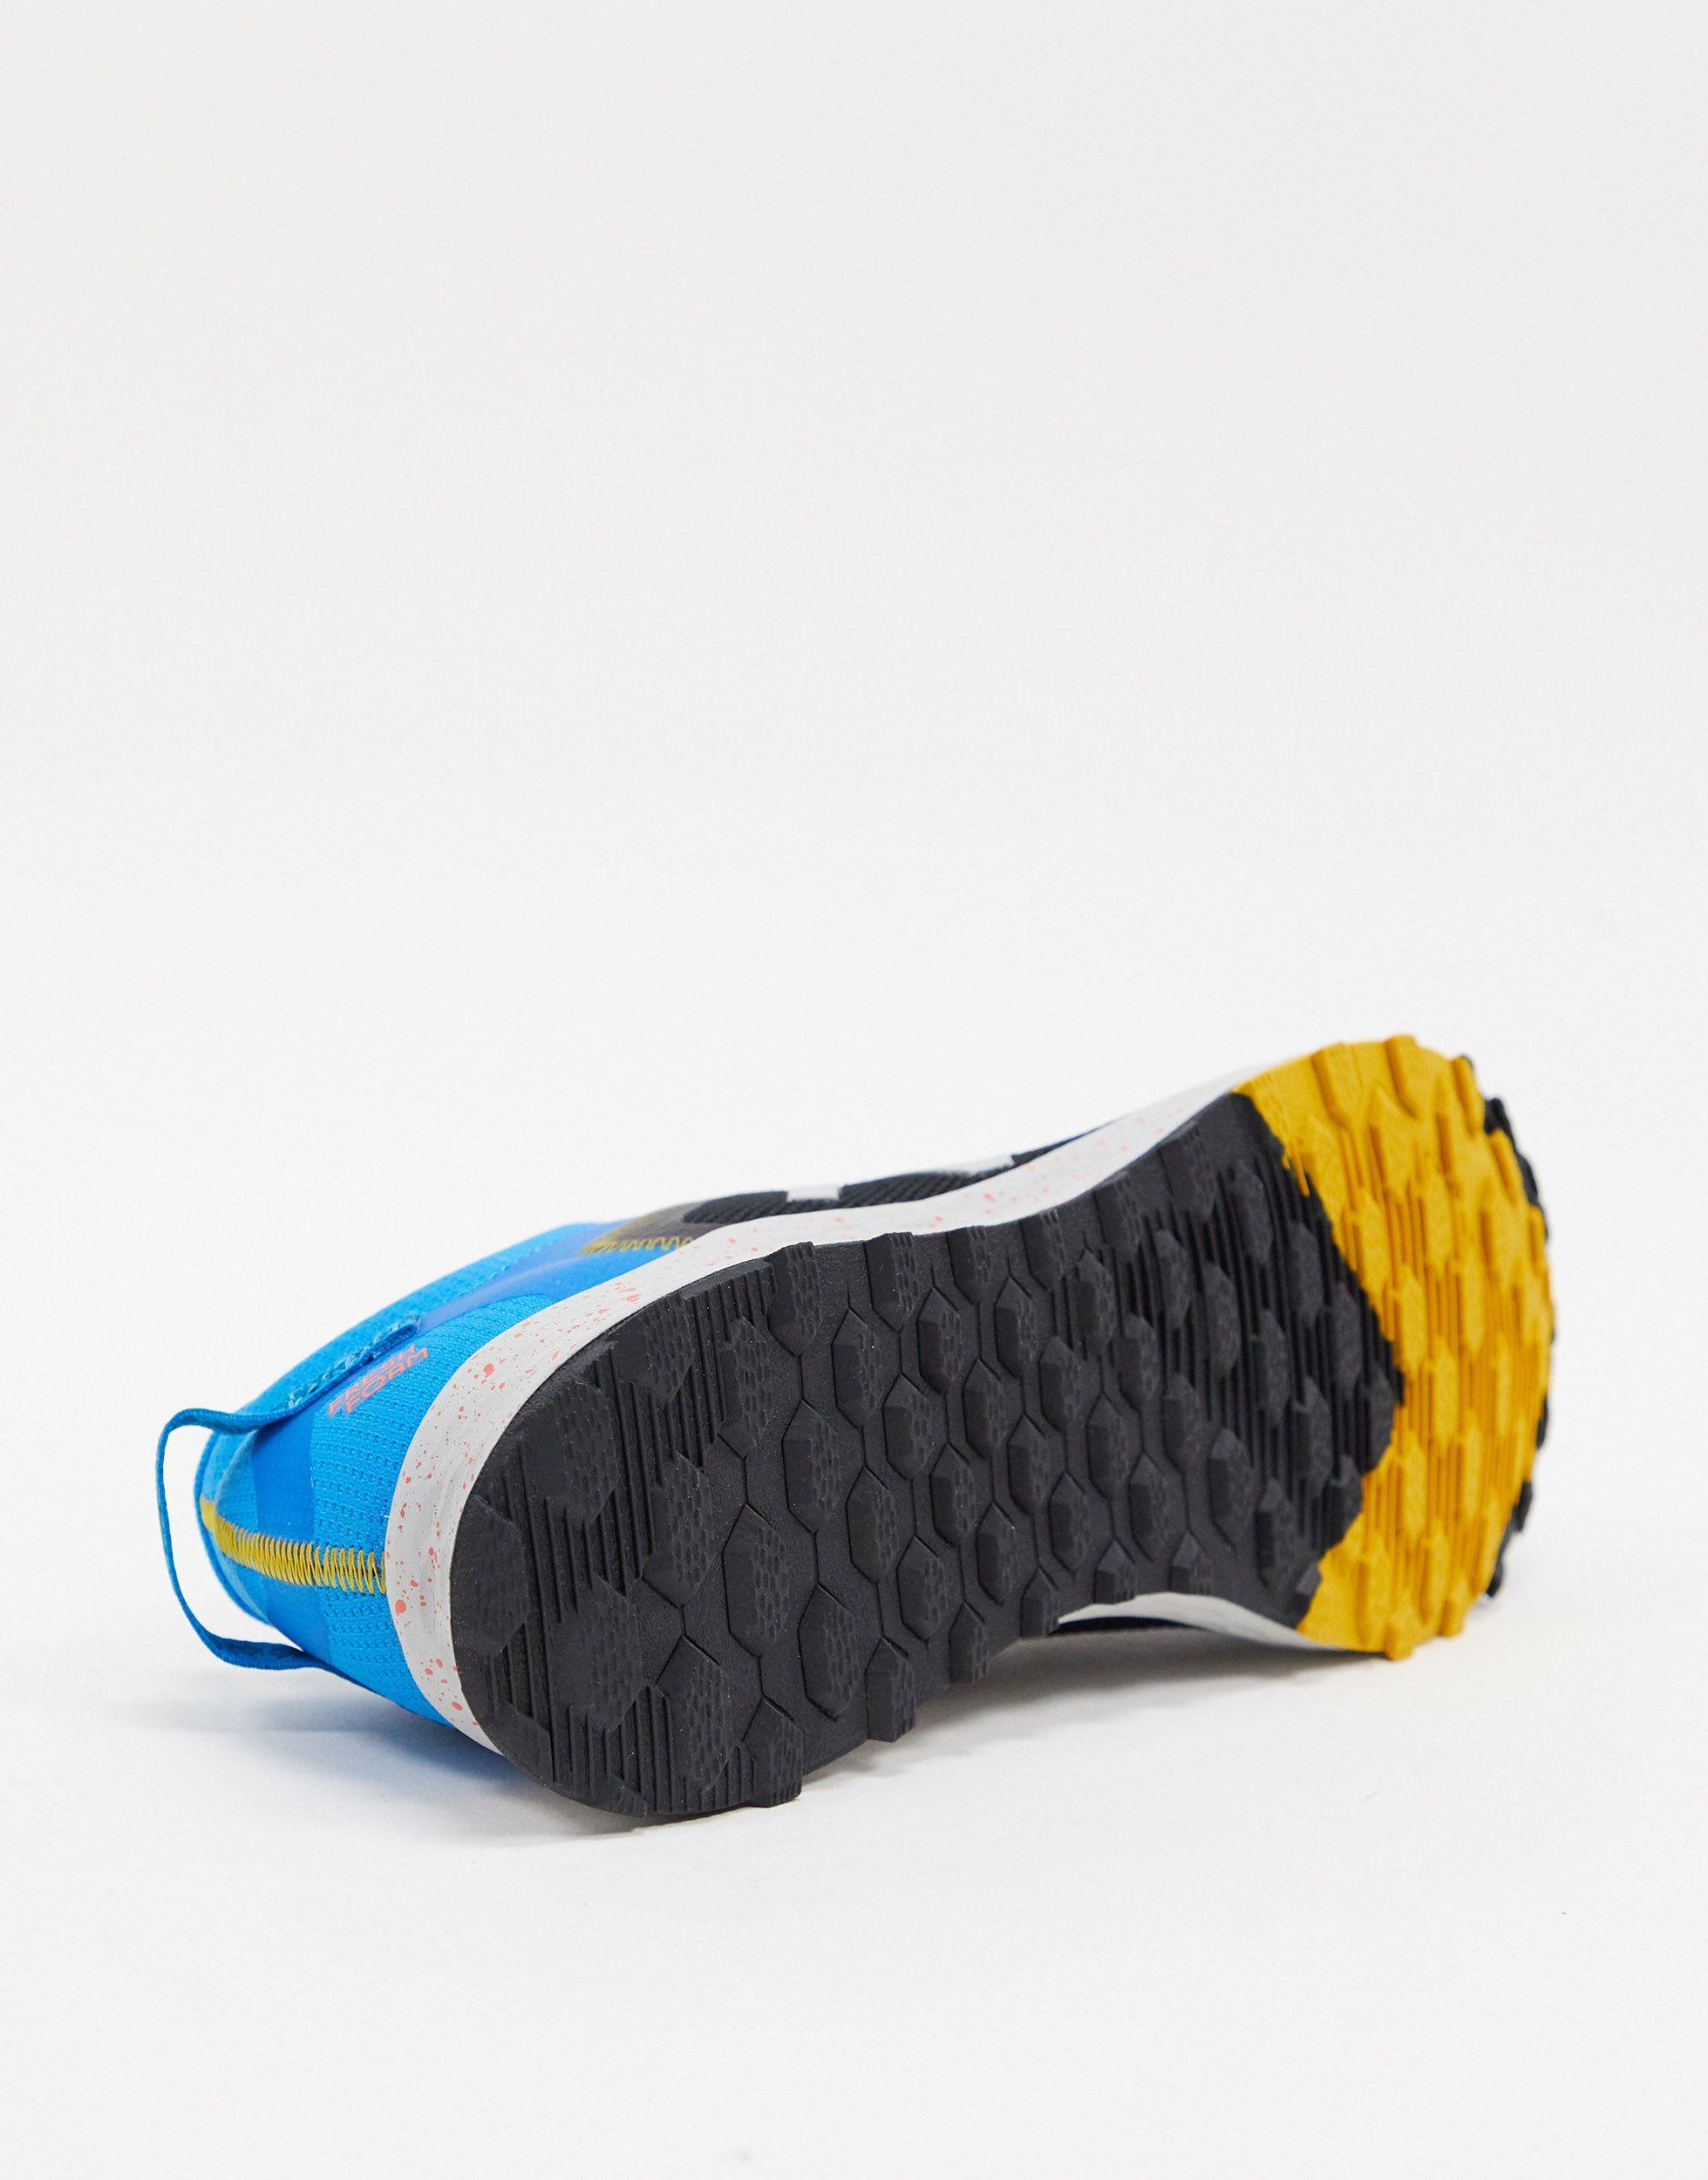 New Balance Fresh Foam Arishi Trail V1 Running Shoe in Black/Black (Black)  for Men - Save 49% | Lyst